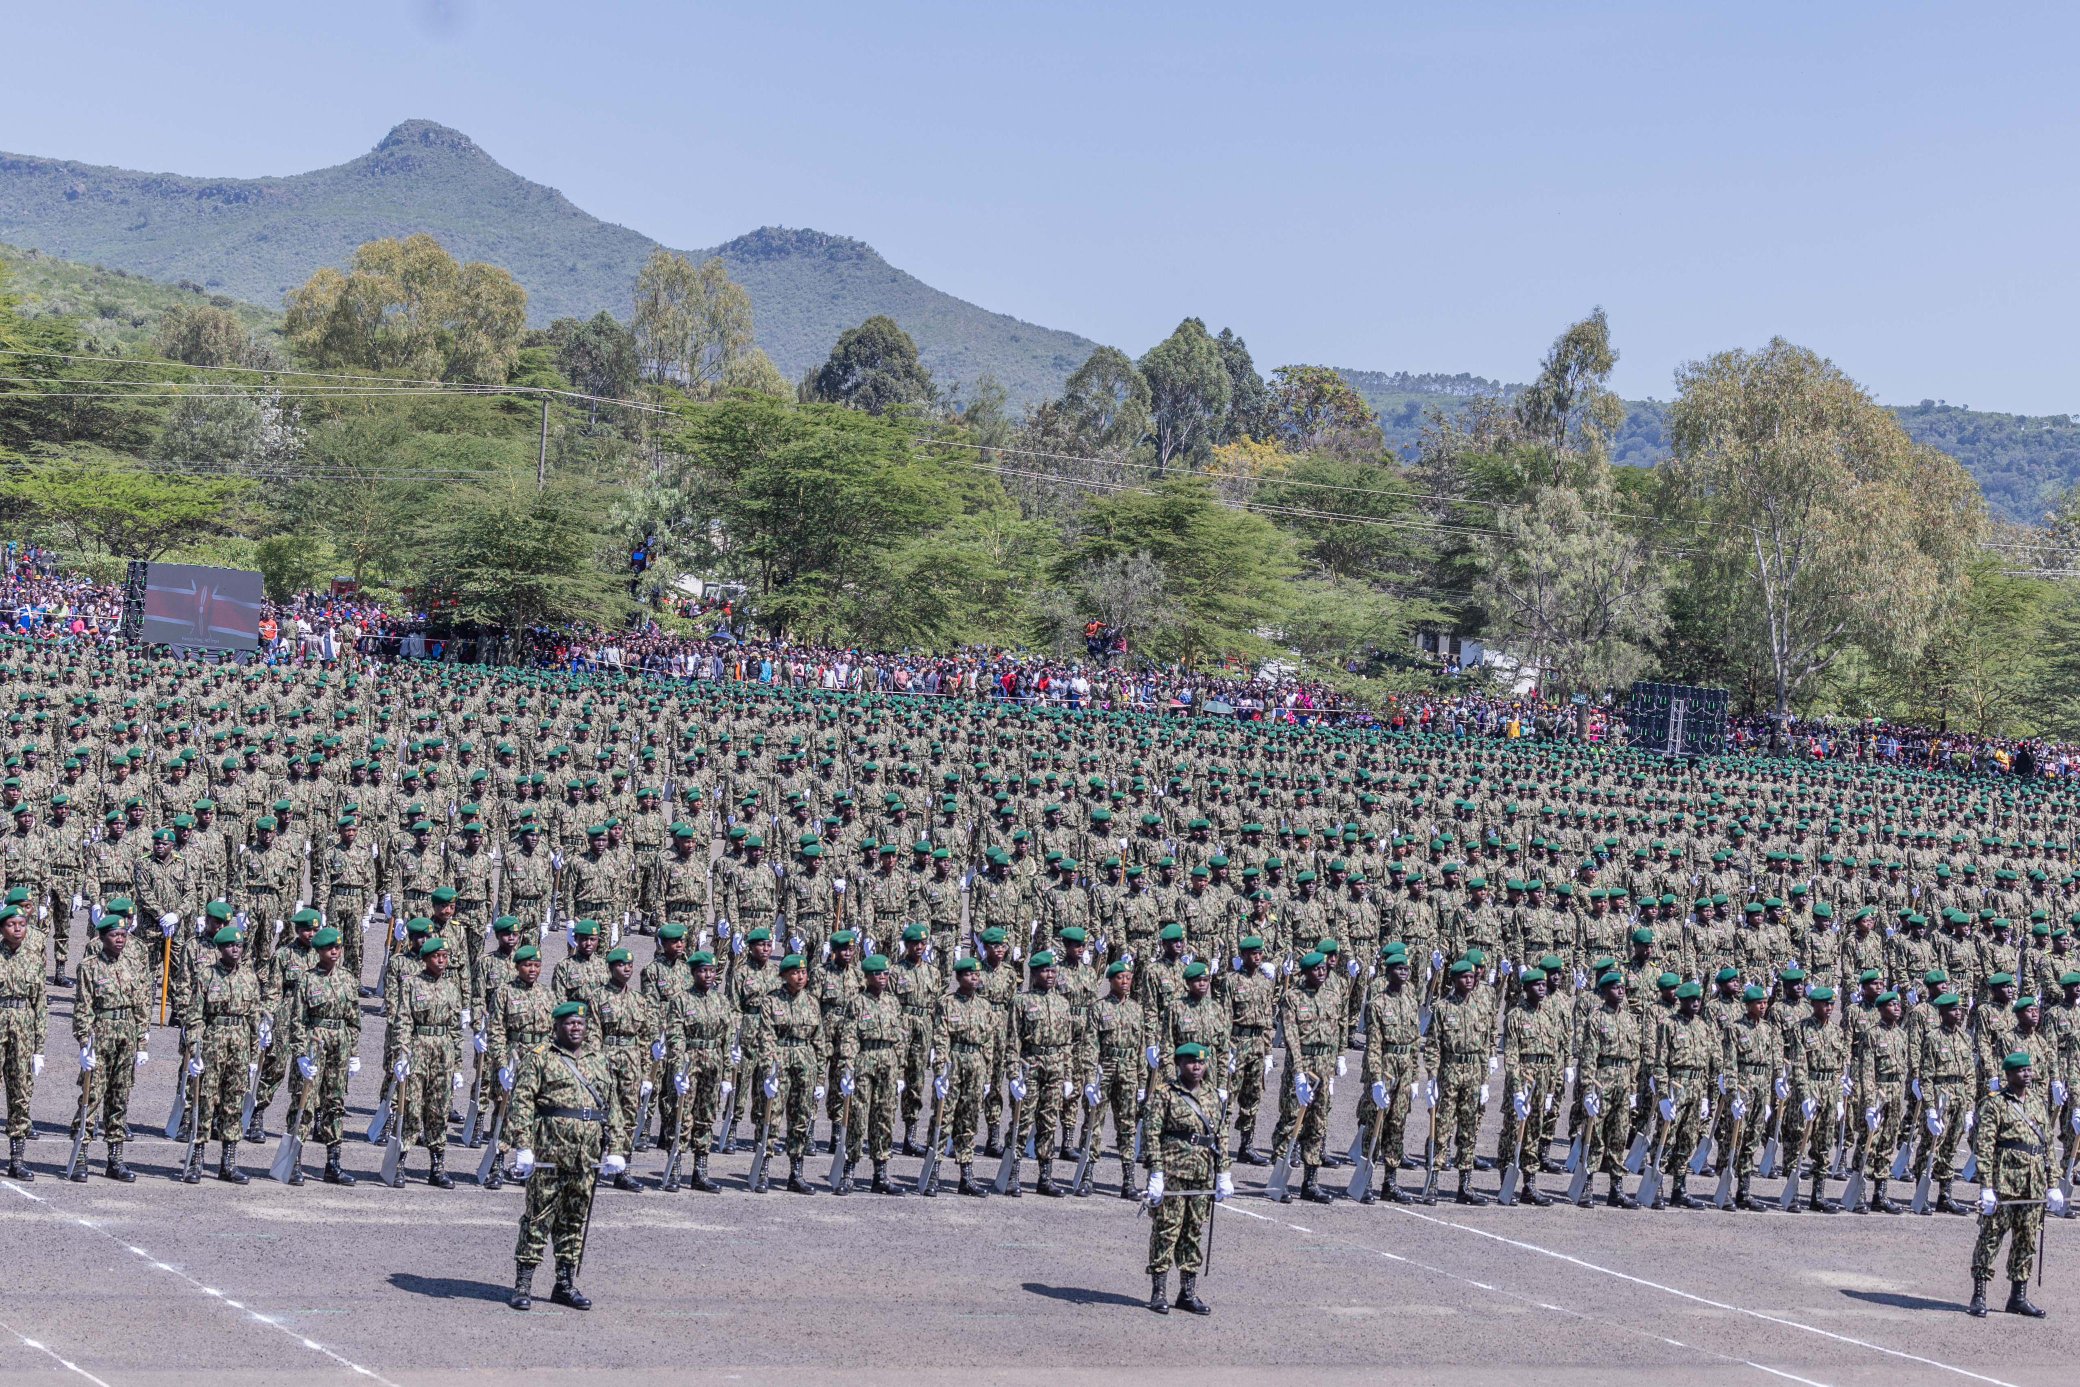 File Image of NYS recruits passing out parade at the National Youth Service Paramilitary Academy, Gilgil, Nakuru County.